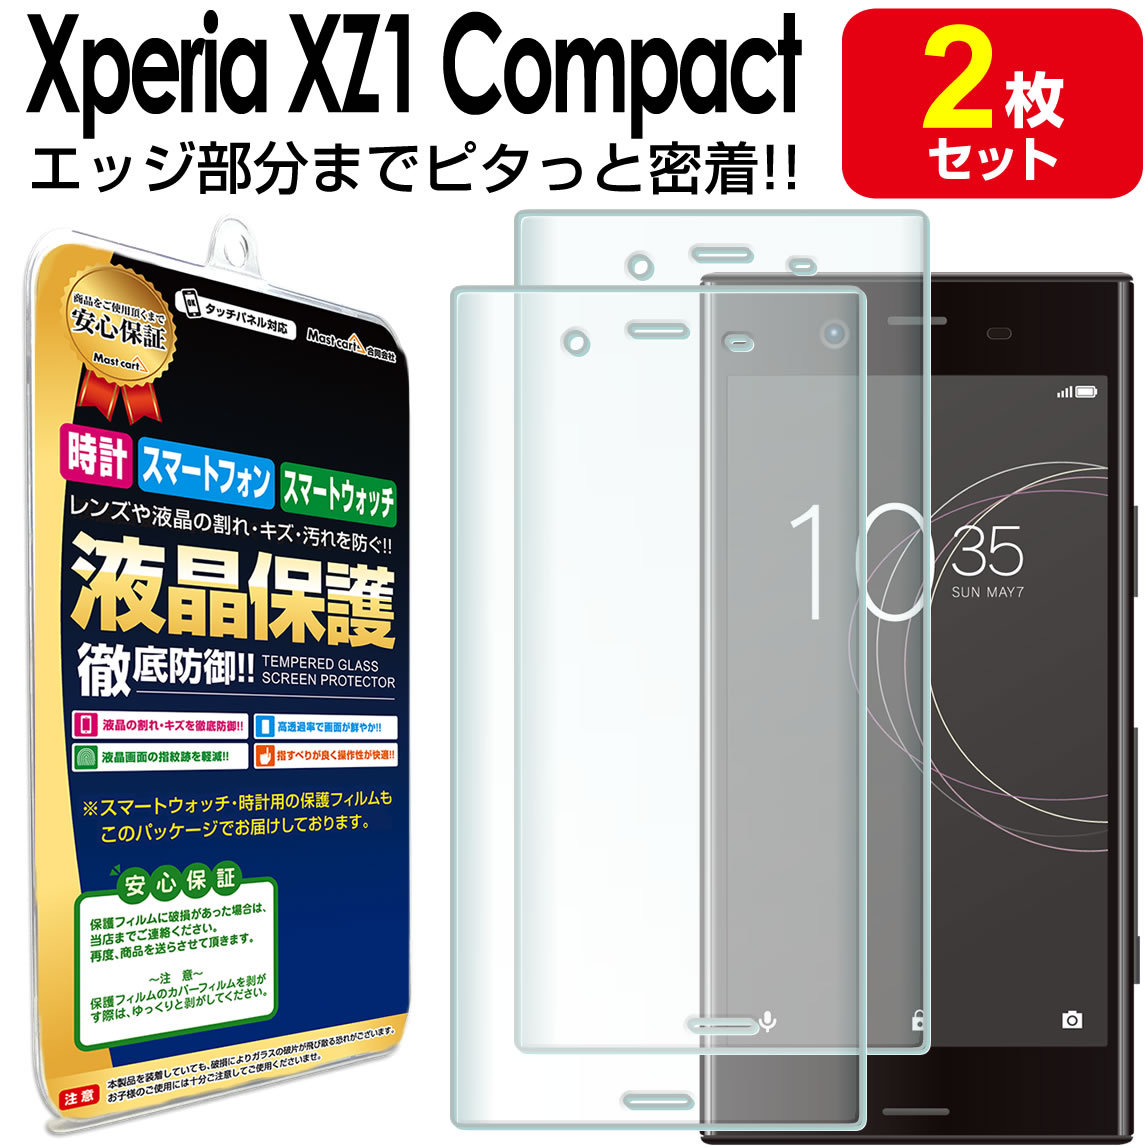 Xperia XZ1 Compact 保護 フィルム 2枚セット XperiaXZ1Compact 全面保護 SO-02K エクスペリア xz1  コンパクト 液晶 :11001264:Mast cart - 通販 - Yahoo!ショッピング